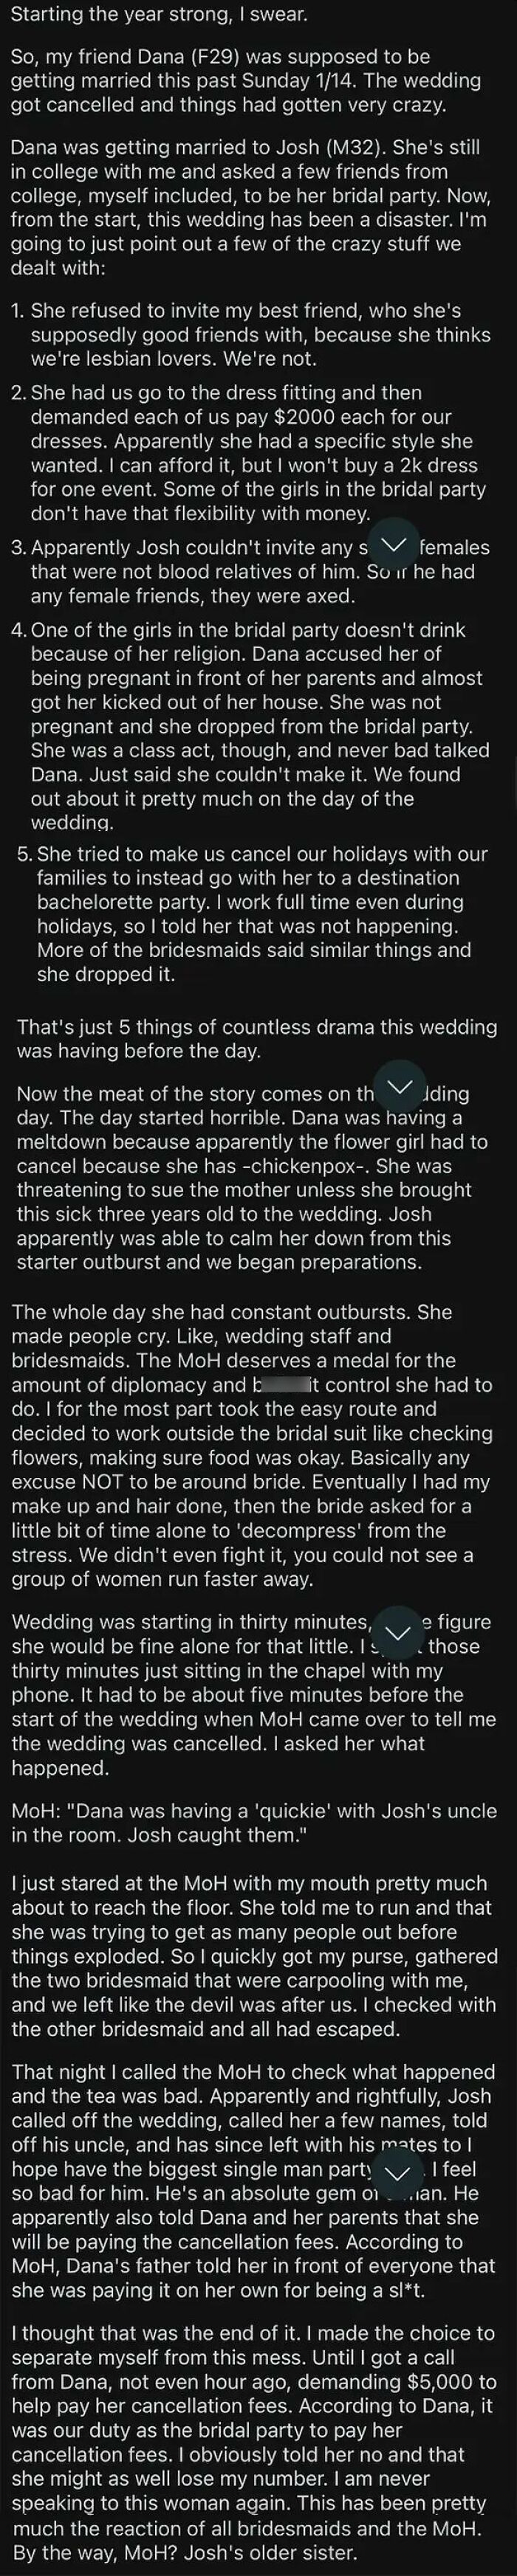 Bridezilla Ruins Her Own Wedding. Demands Bridal Party Pay Her Cancelled Wedding